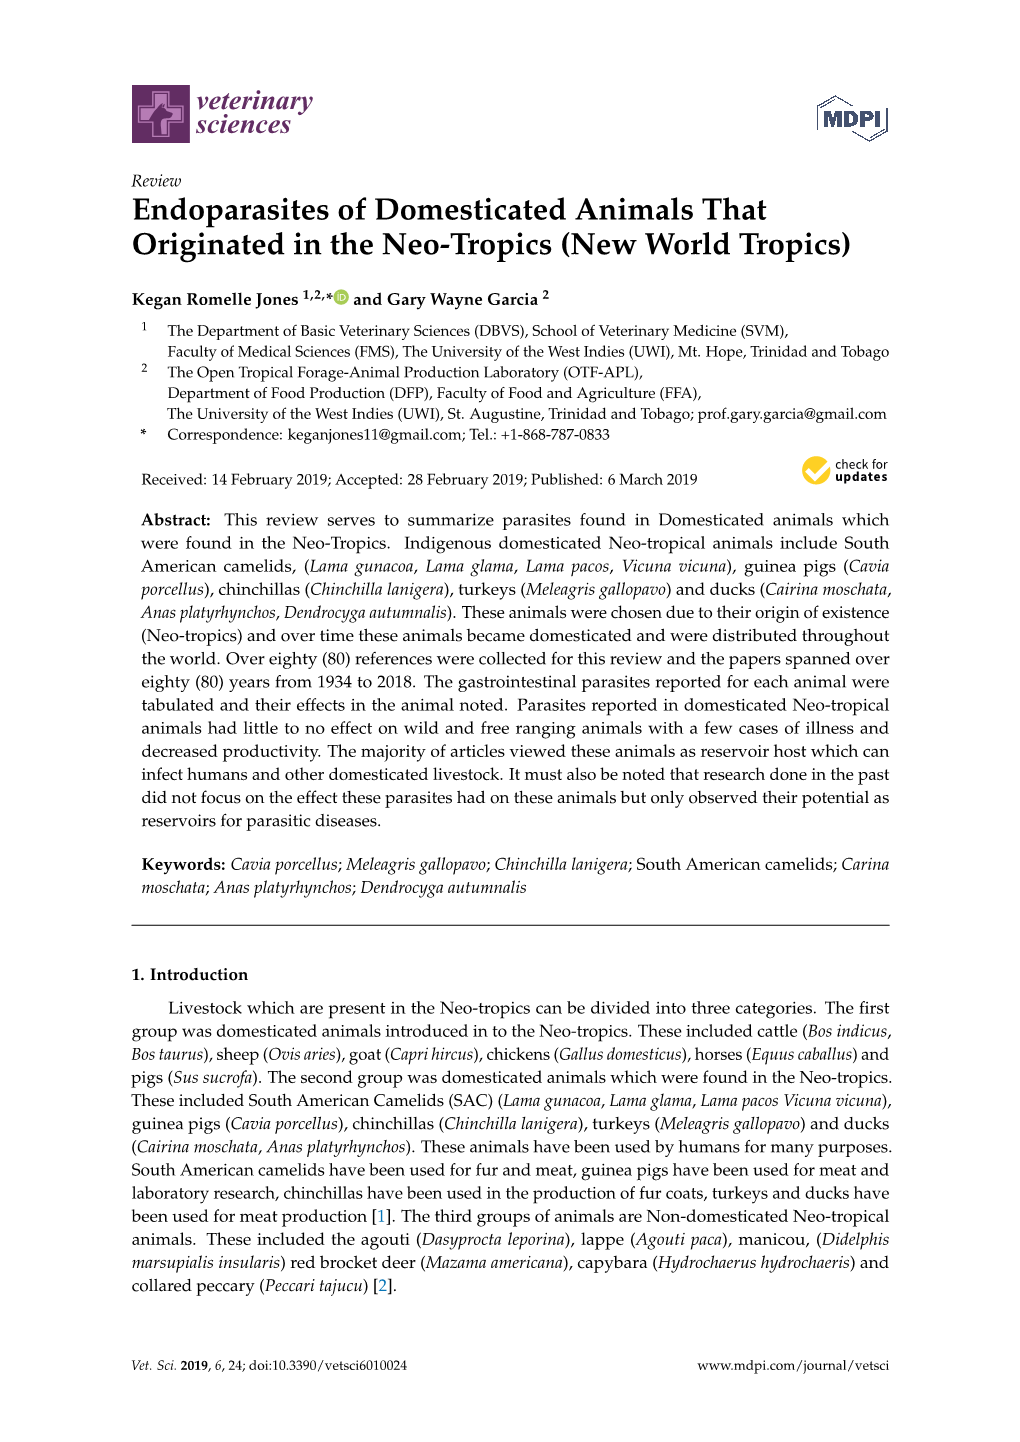 Endoparasites of Domesticated Animals That Originated in the Neo-Tropics (New World Tropics)